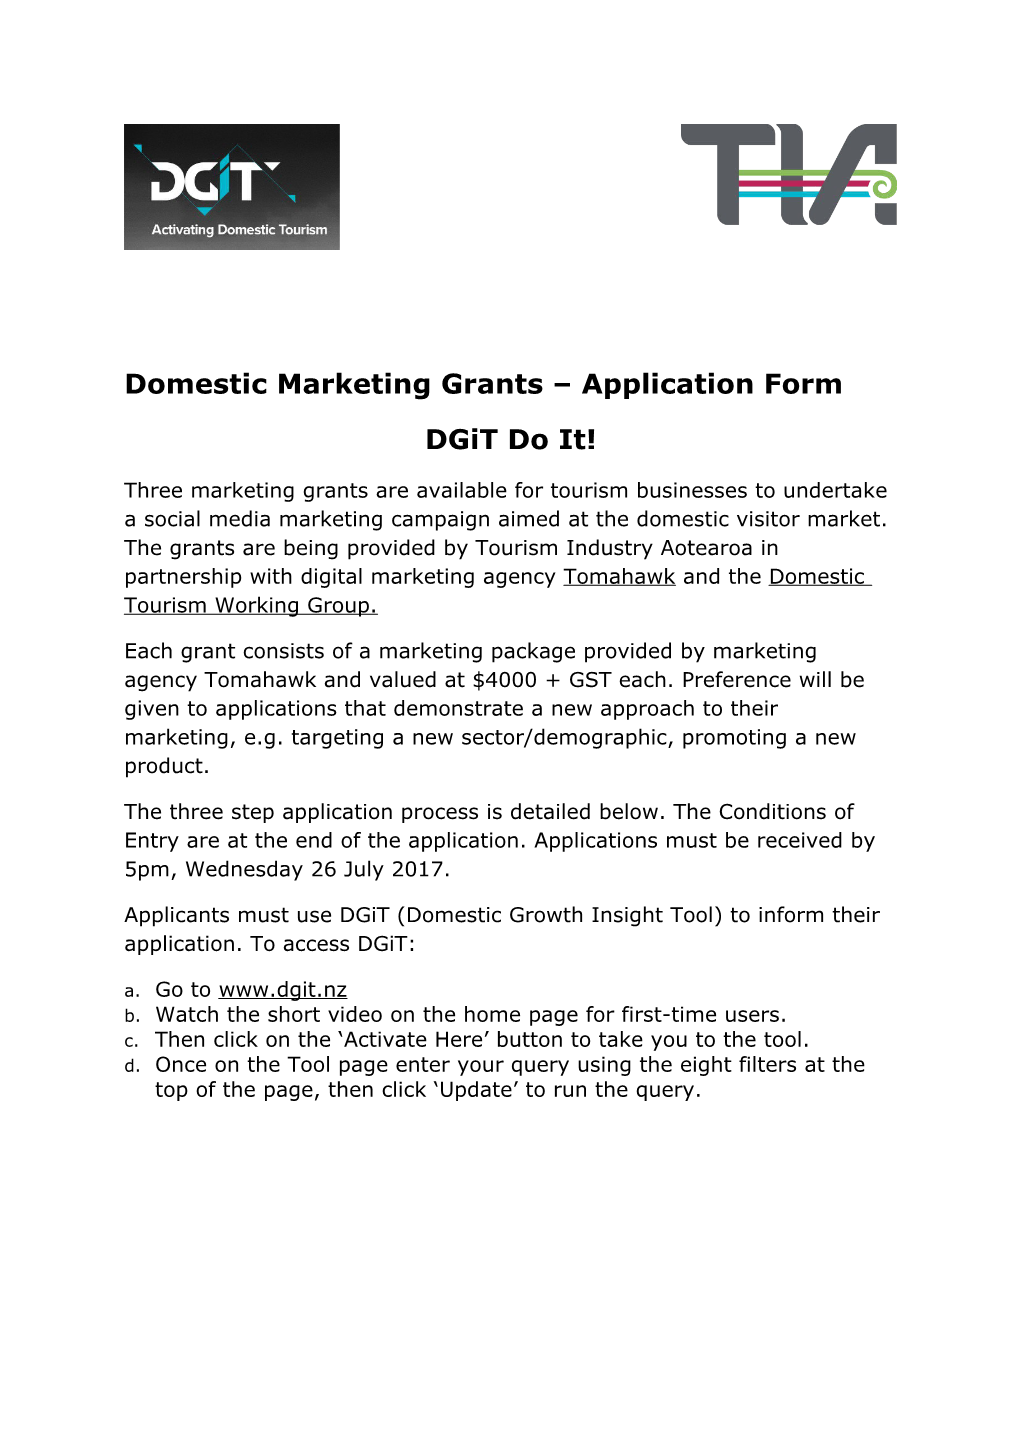 Domestic Marketing Grants Application Form